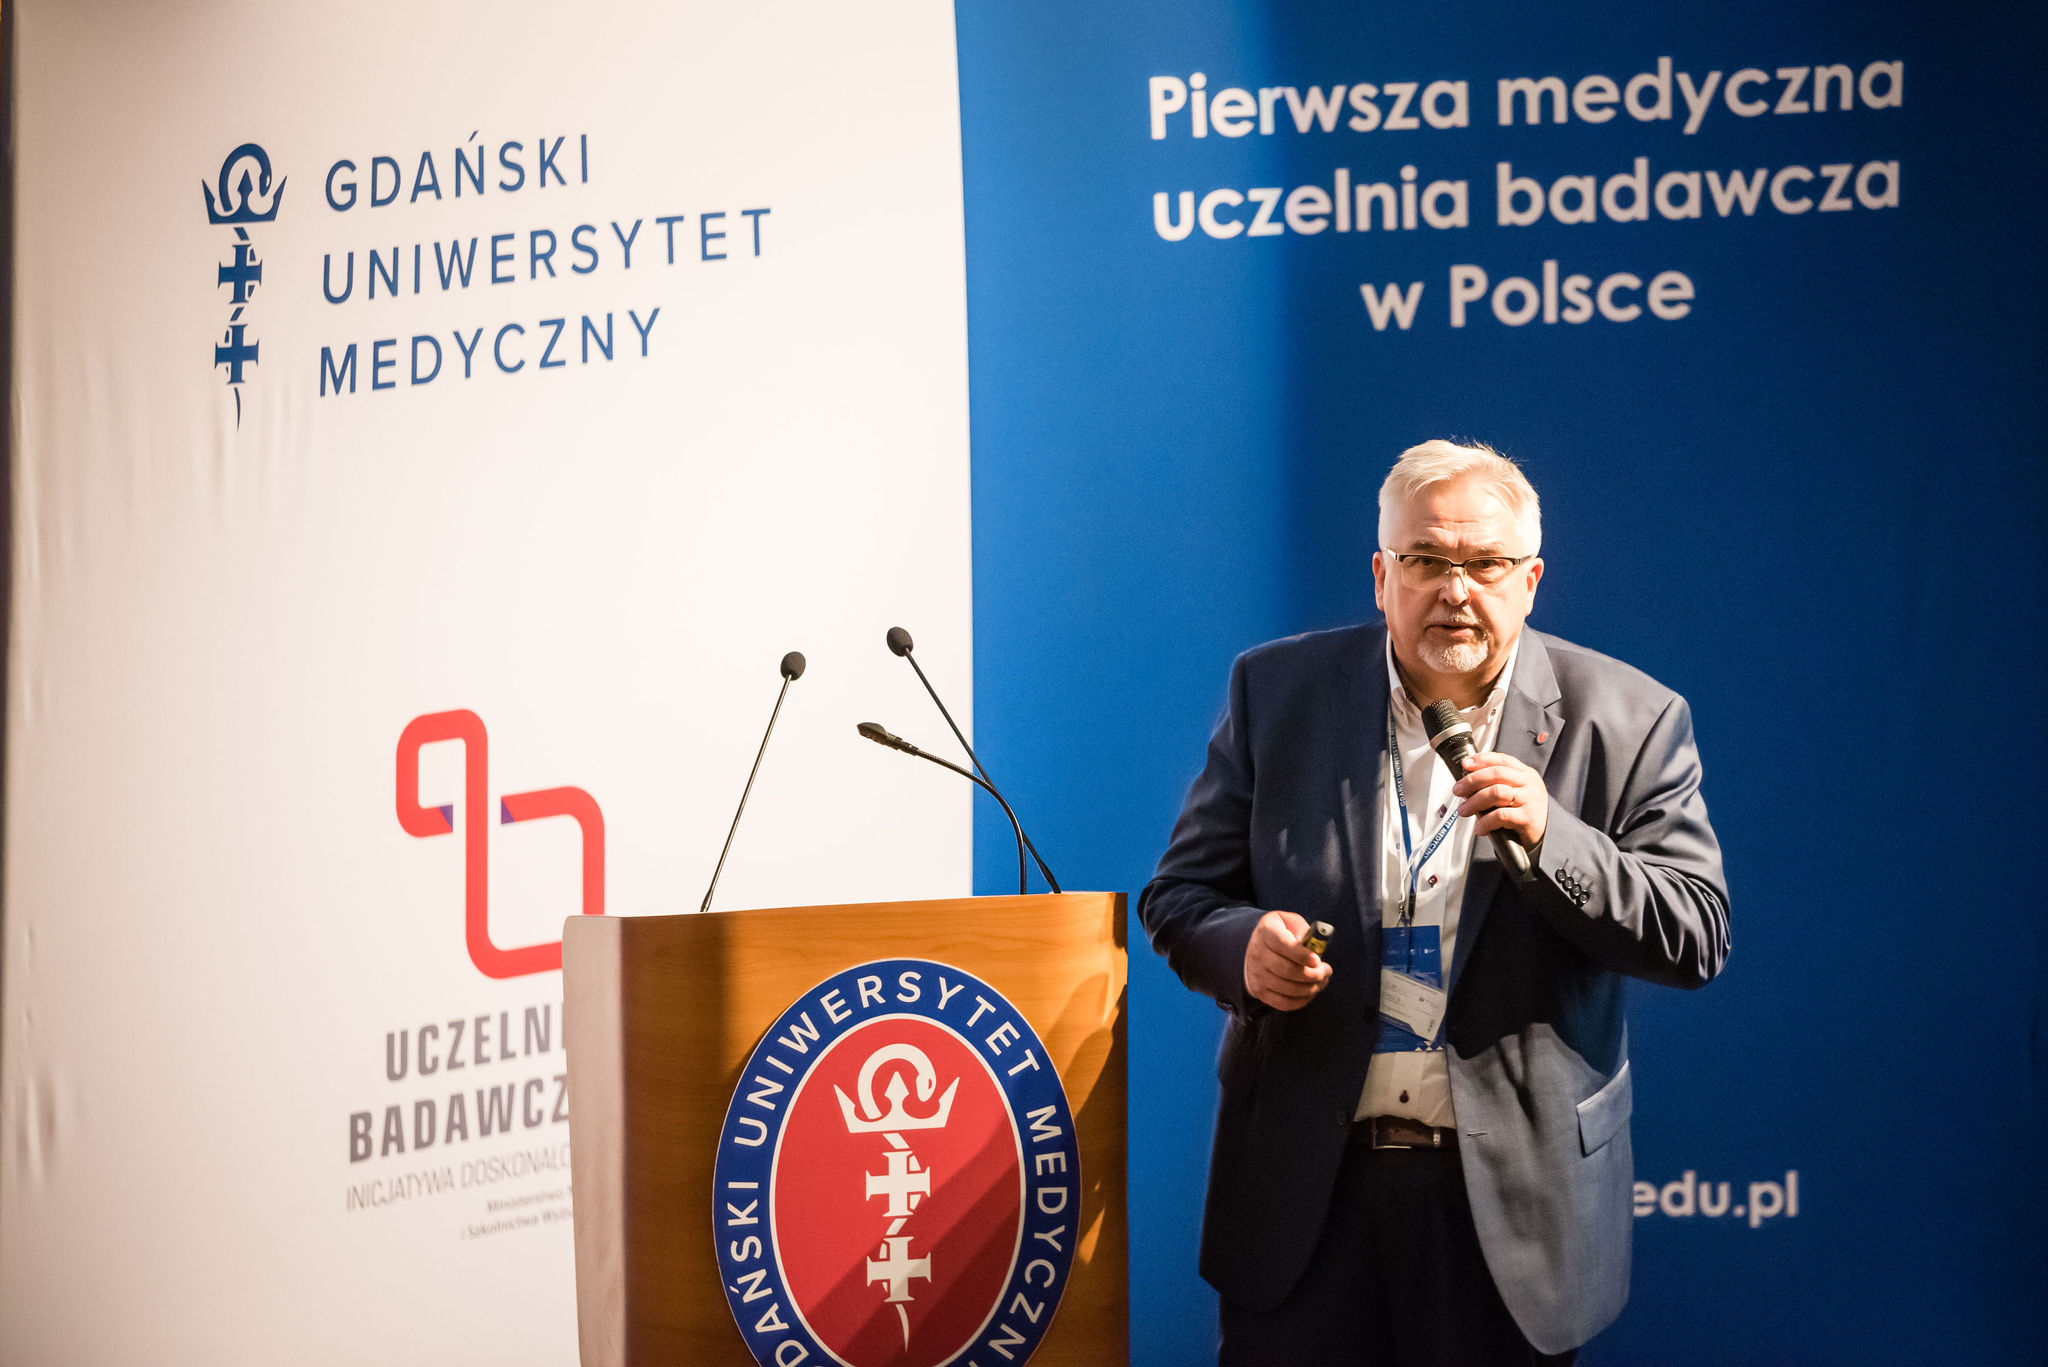 prof. T. Smiatacz during the FarU Business Convention visit the MUG